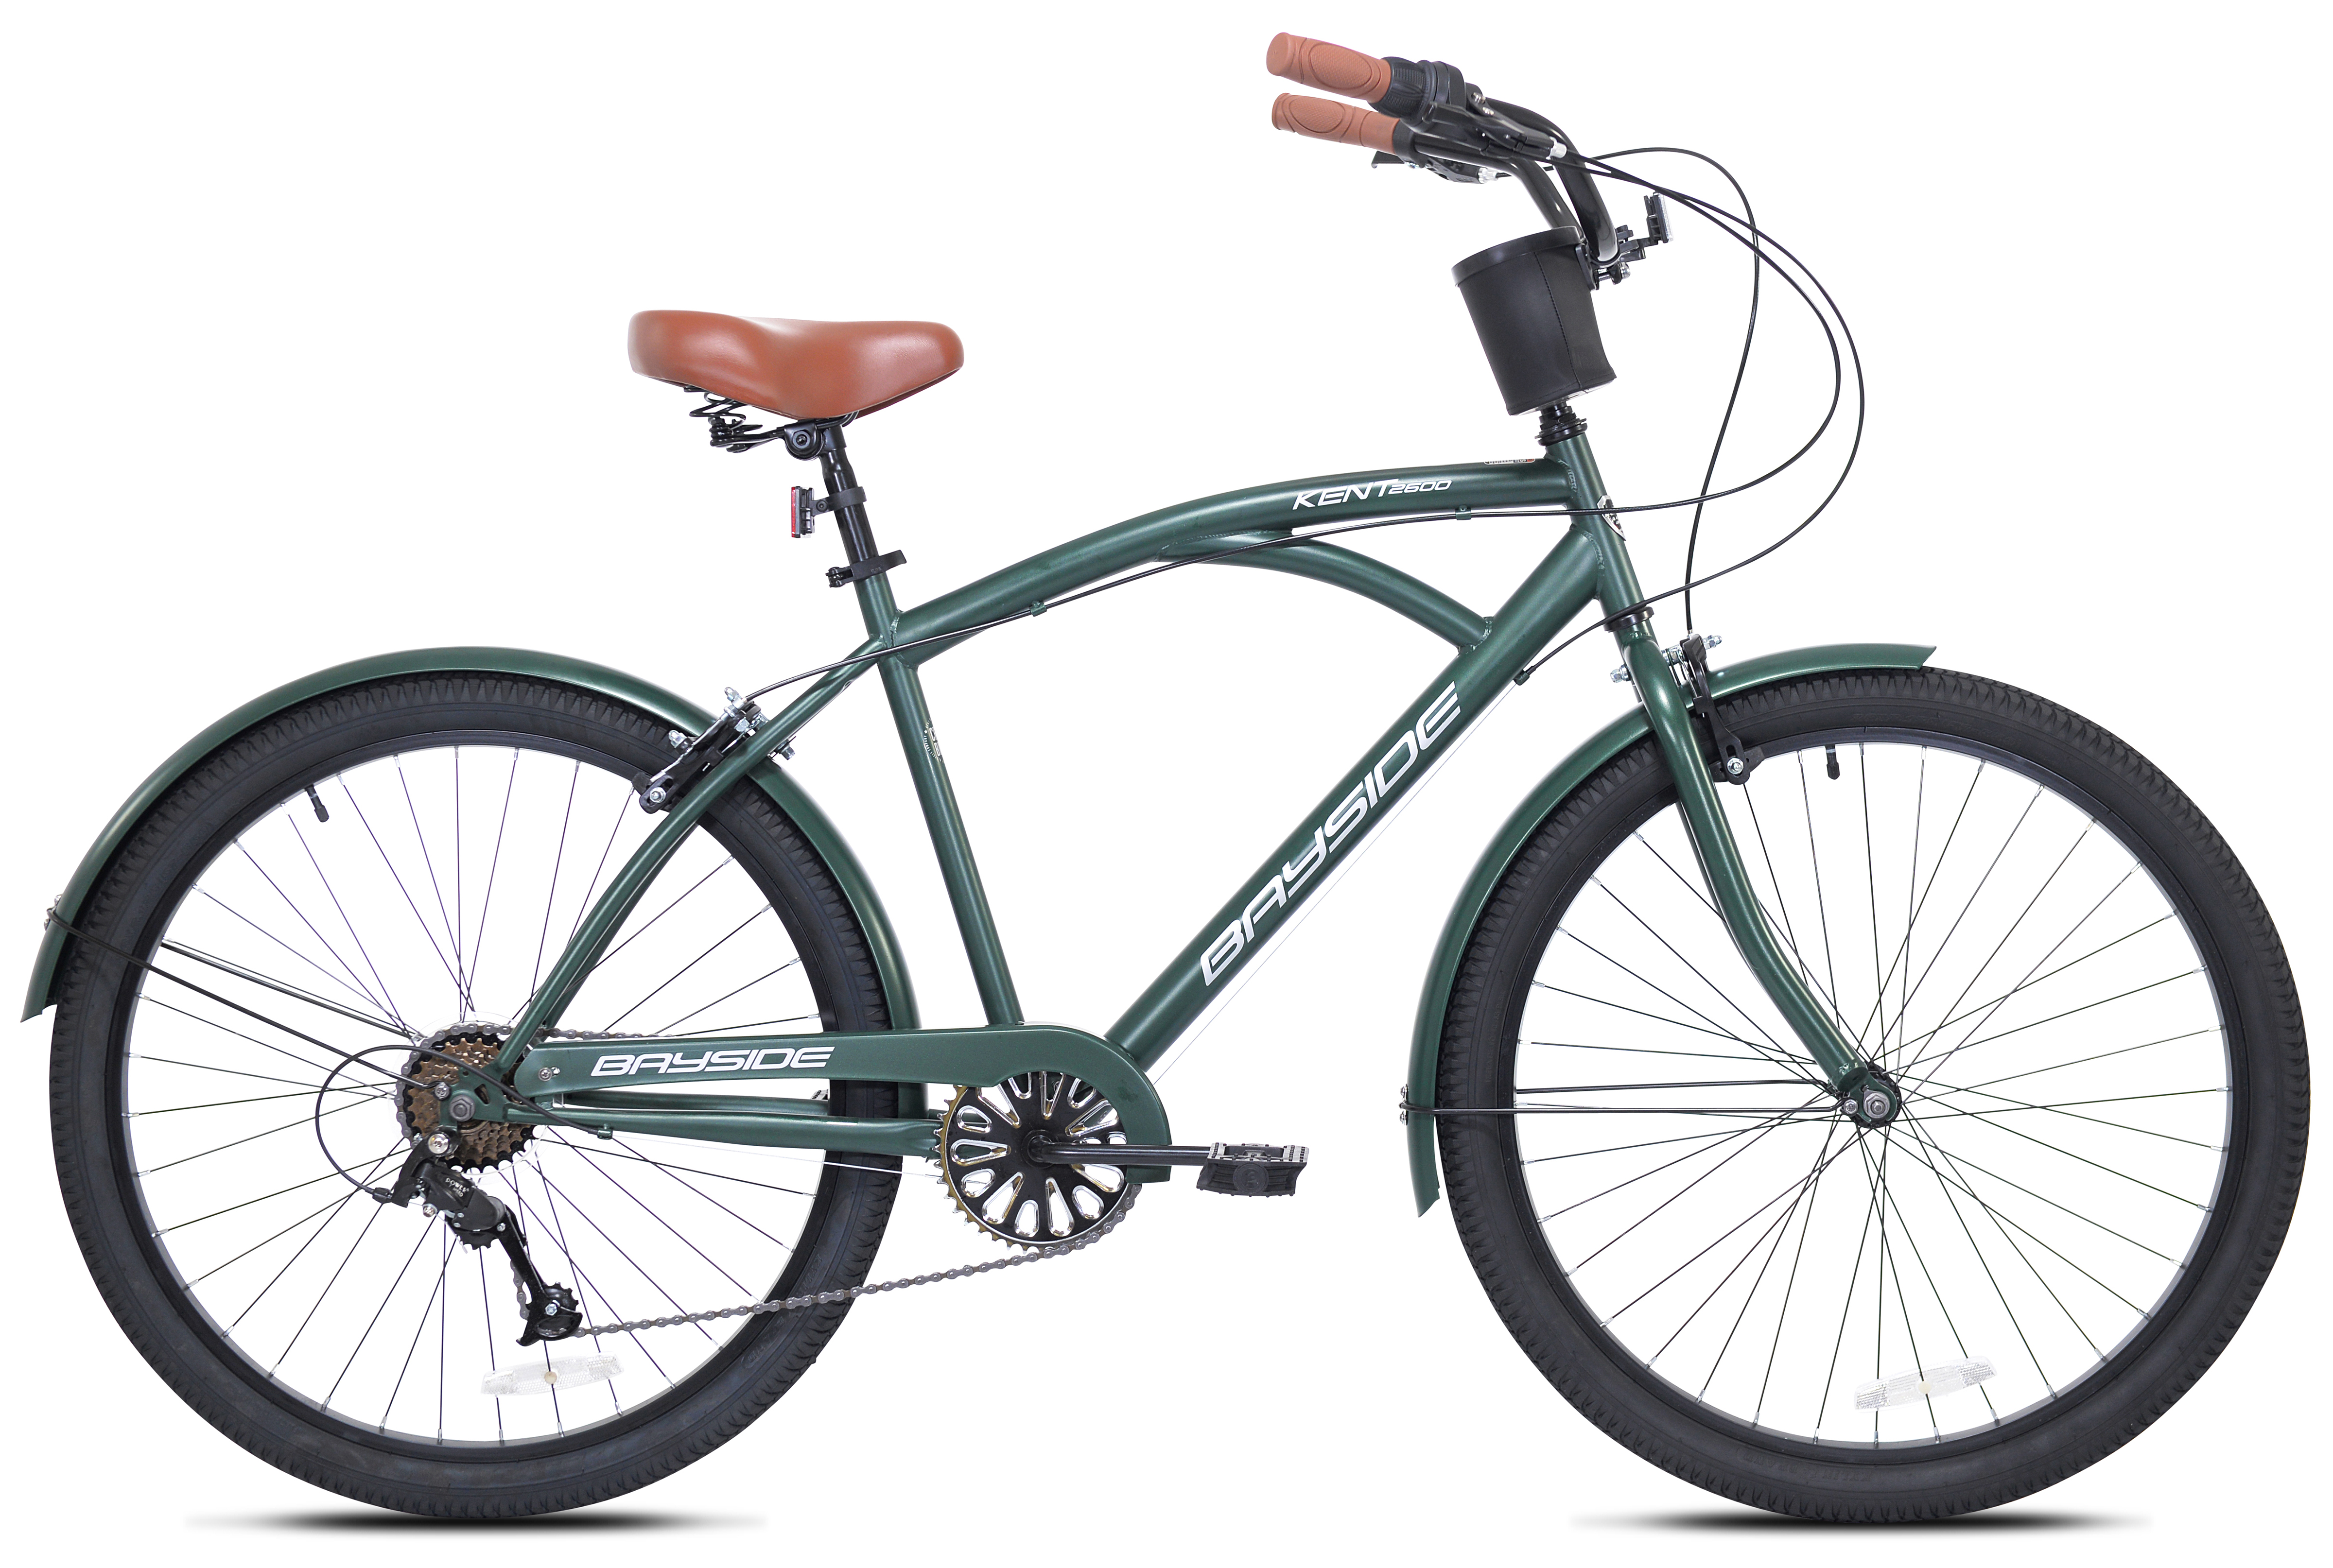 Kent Bicycles 26-inch Bayside Men's Cruiser Bicycle, Green - image 1 of 8